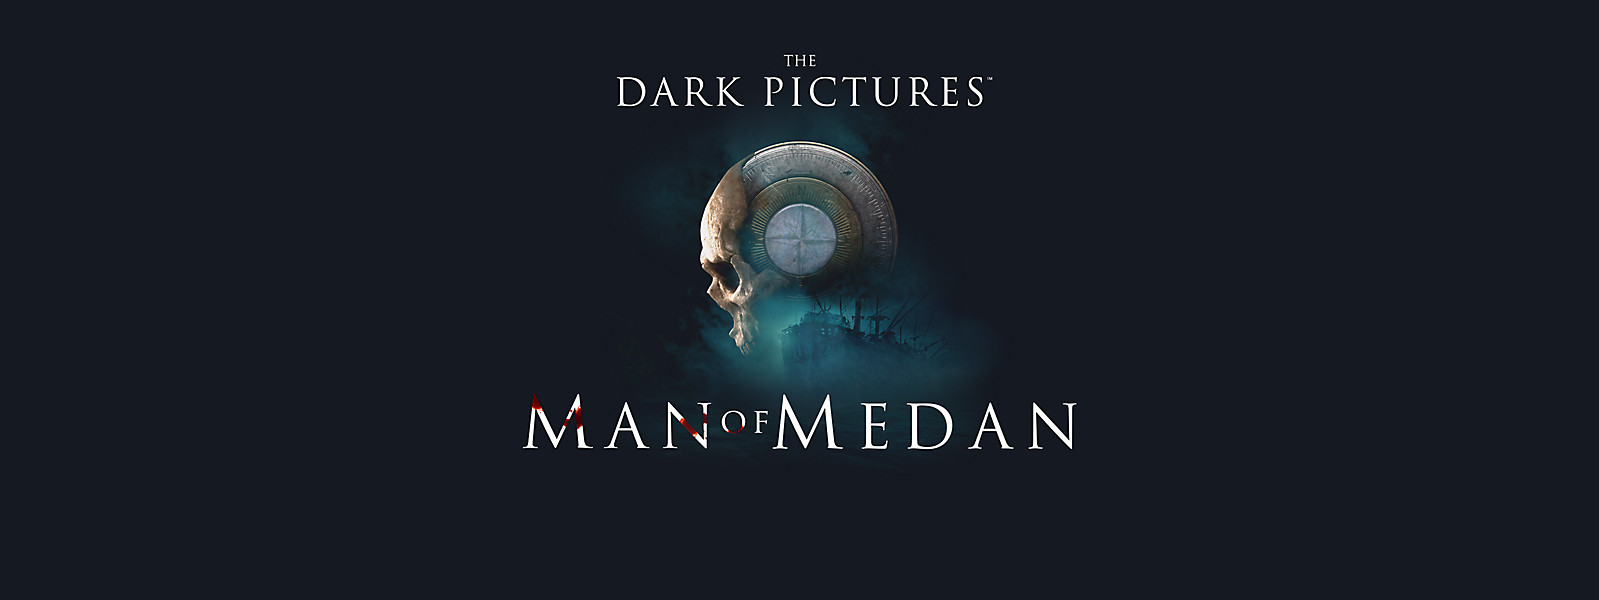 LTG Halloween Review: “Man of Medan” (2019)